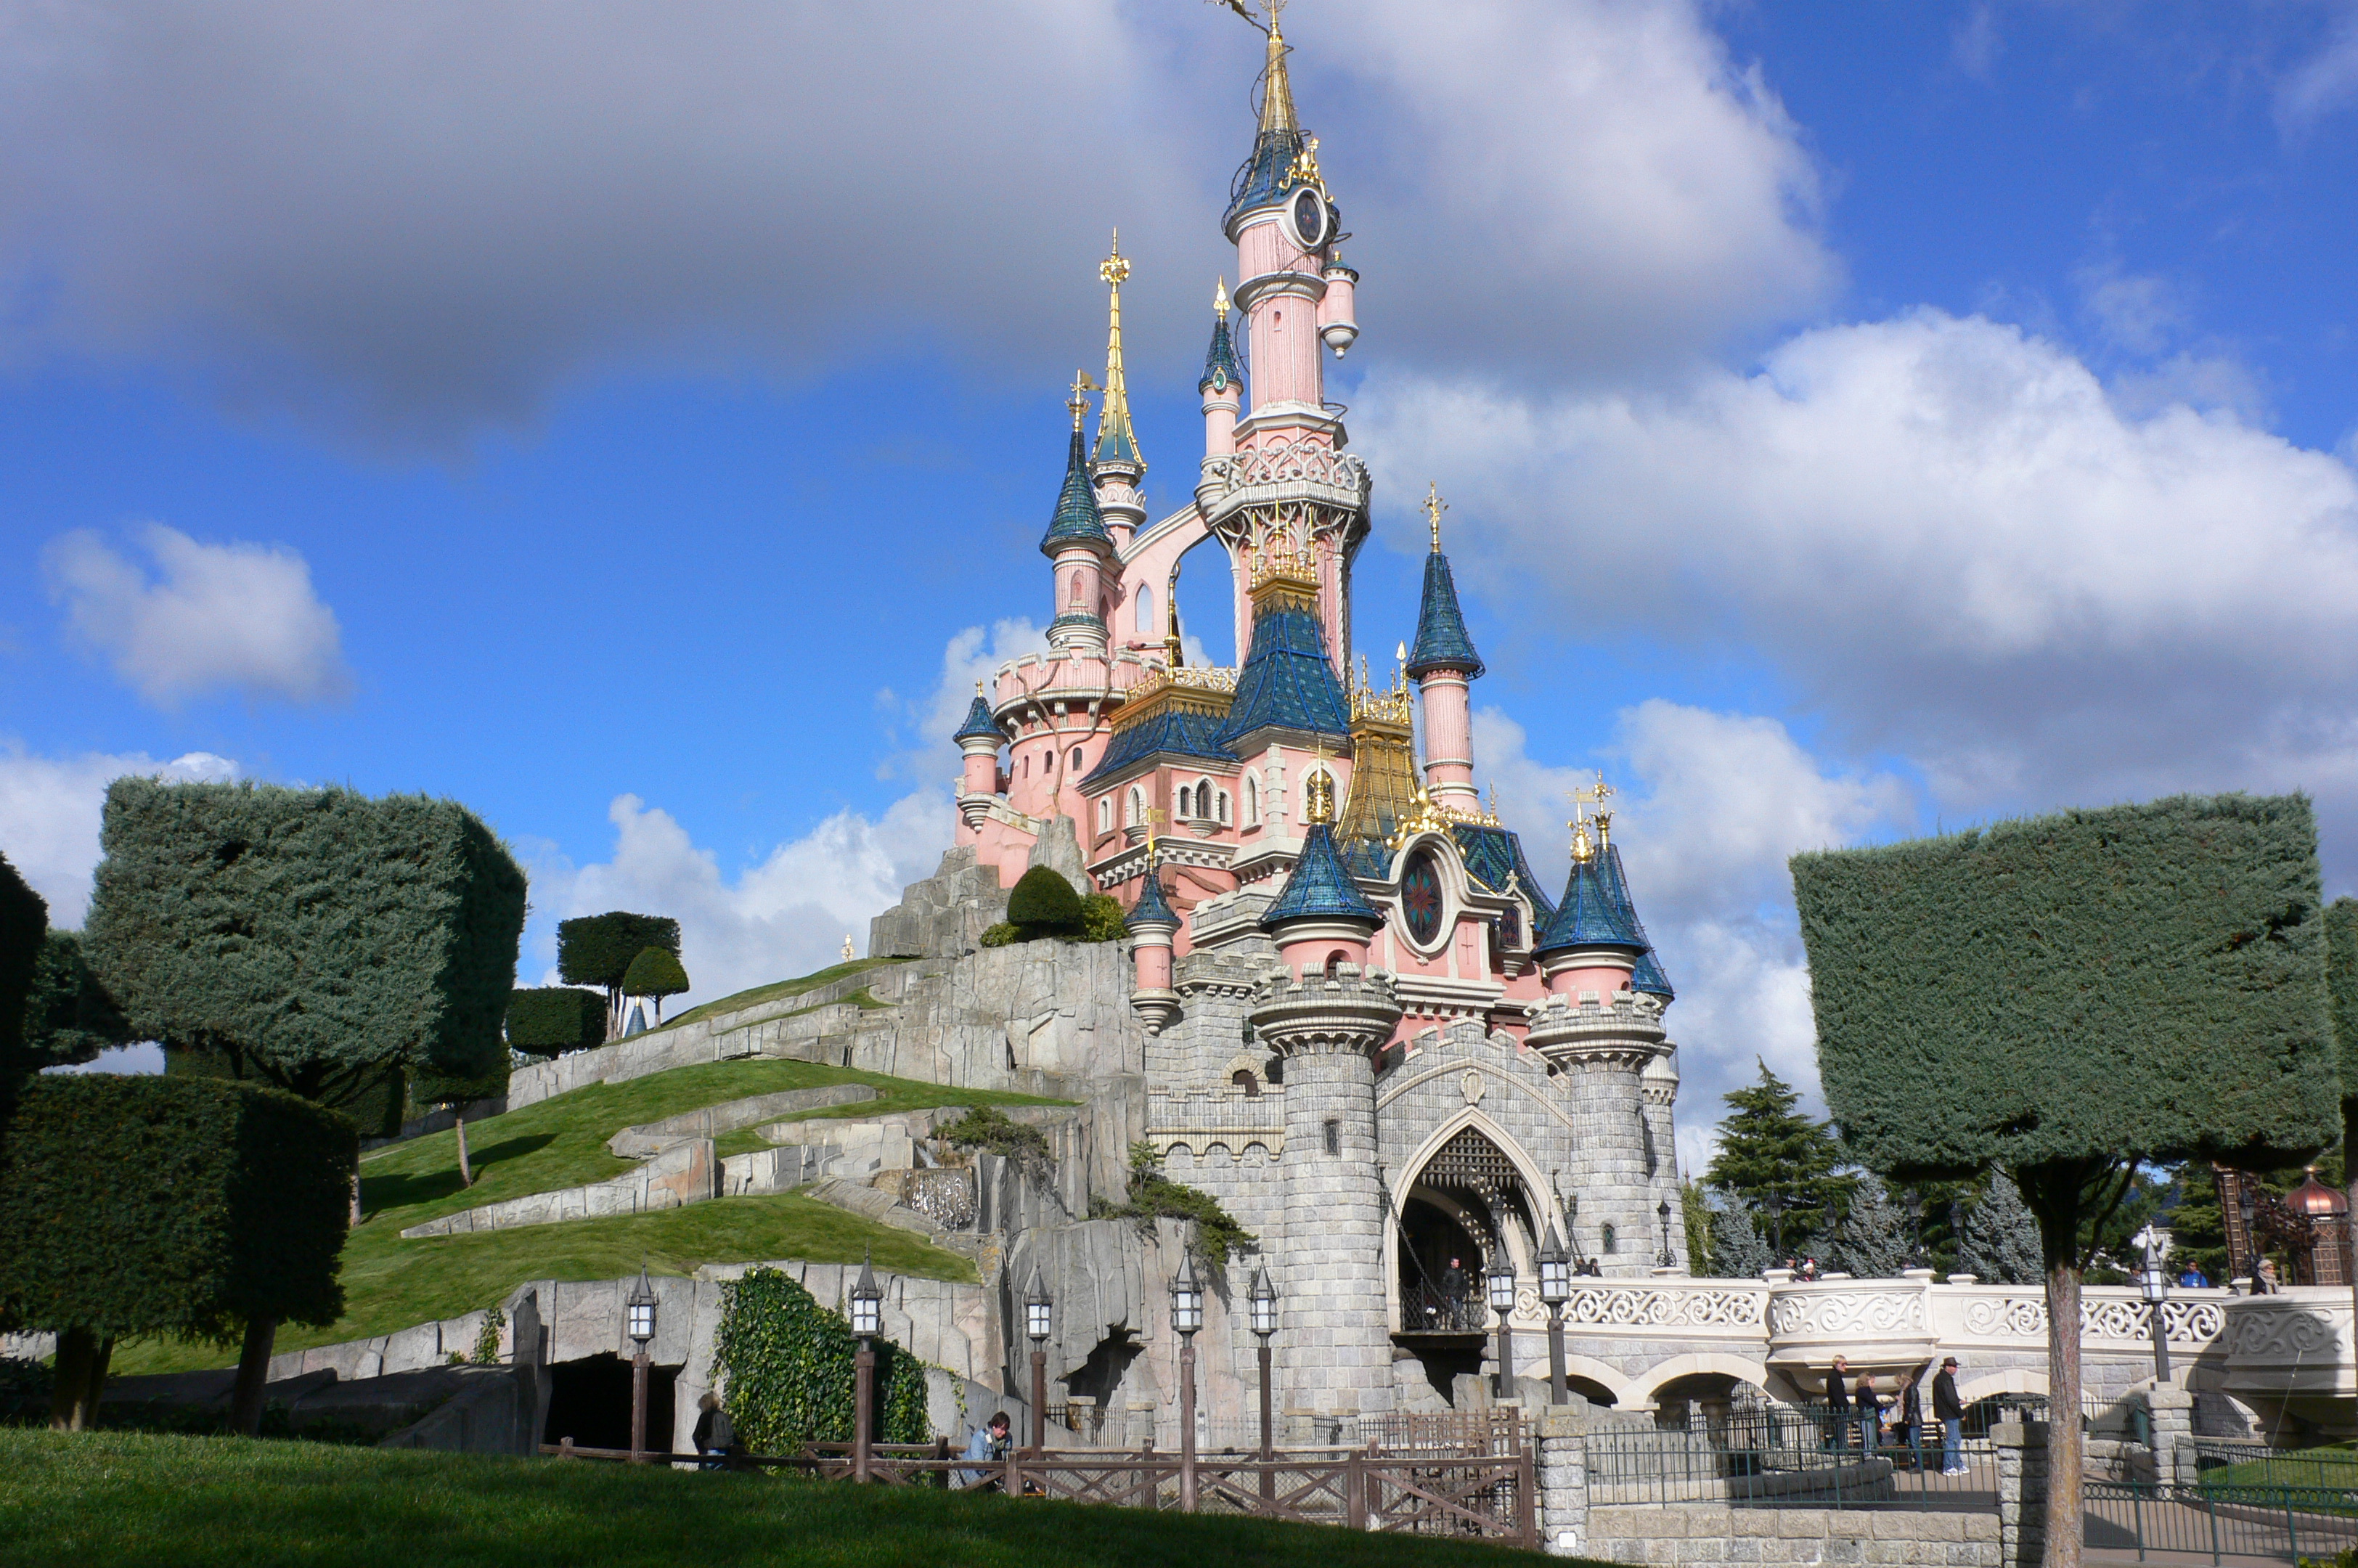 Sleeping_Beauty_Castle,_Disneyland,_Paris